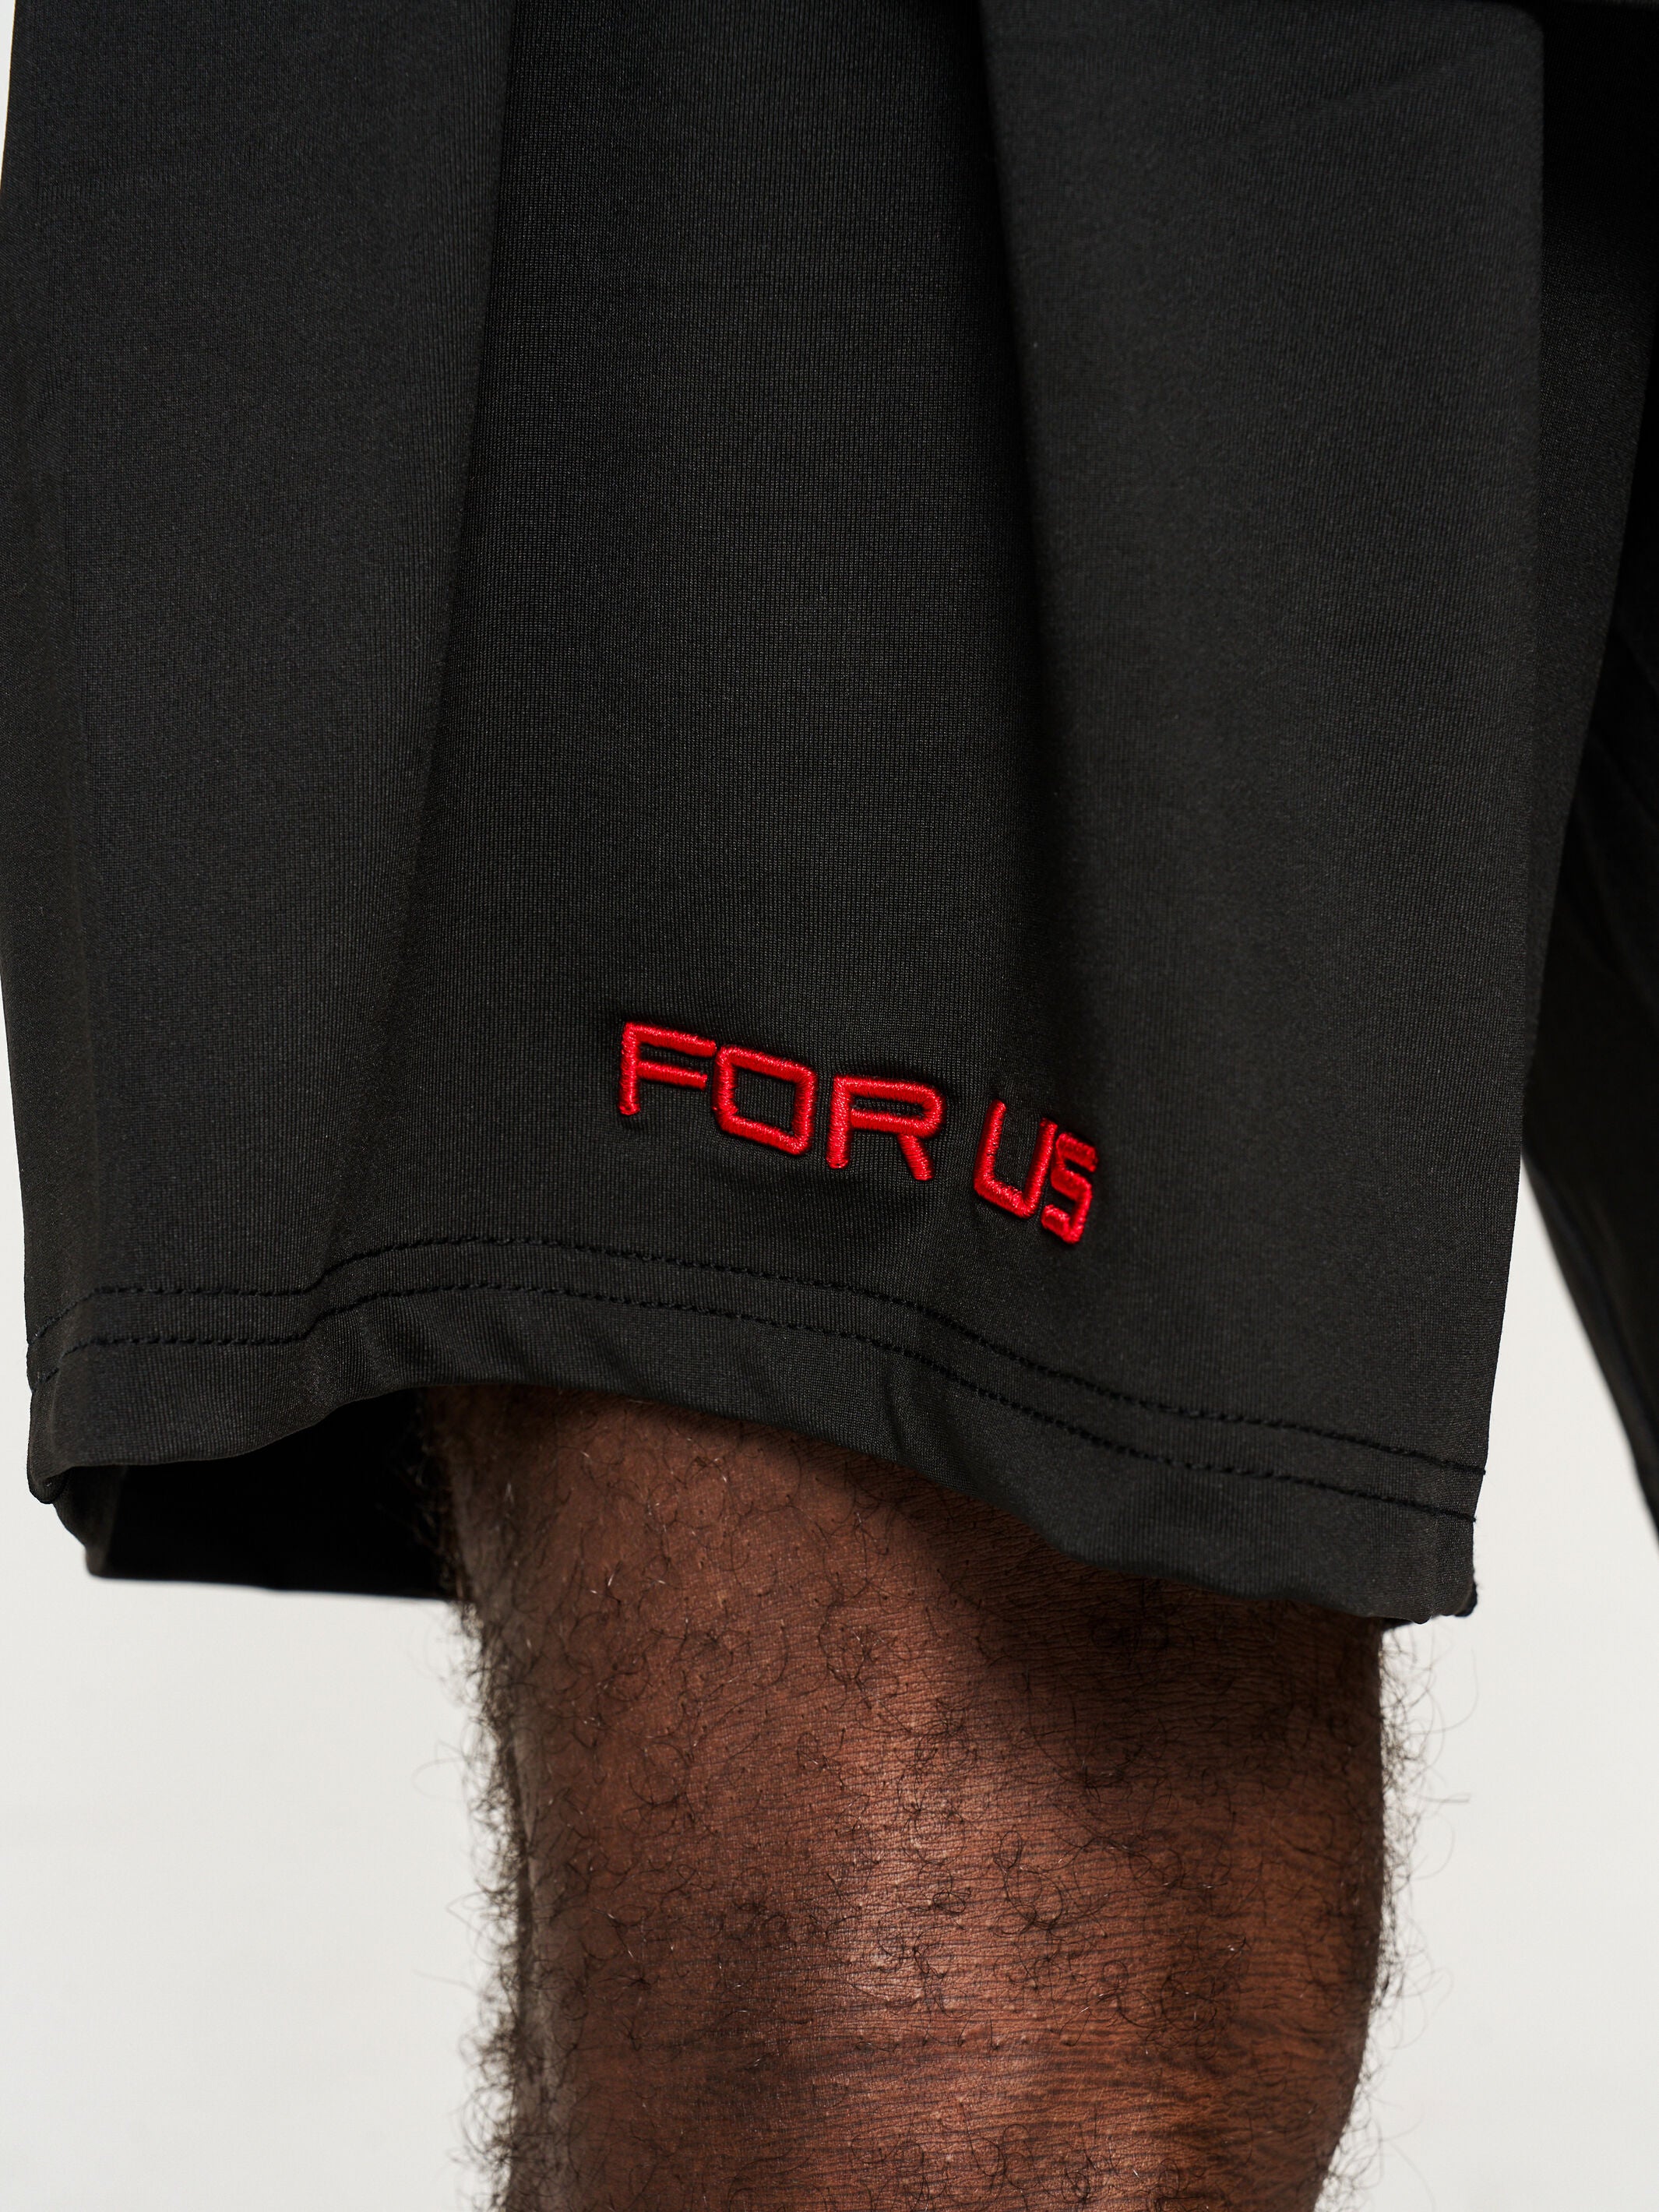 Men's FUBU x Actively Black Performance Shorts